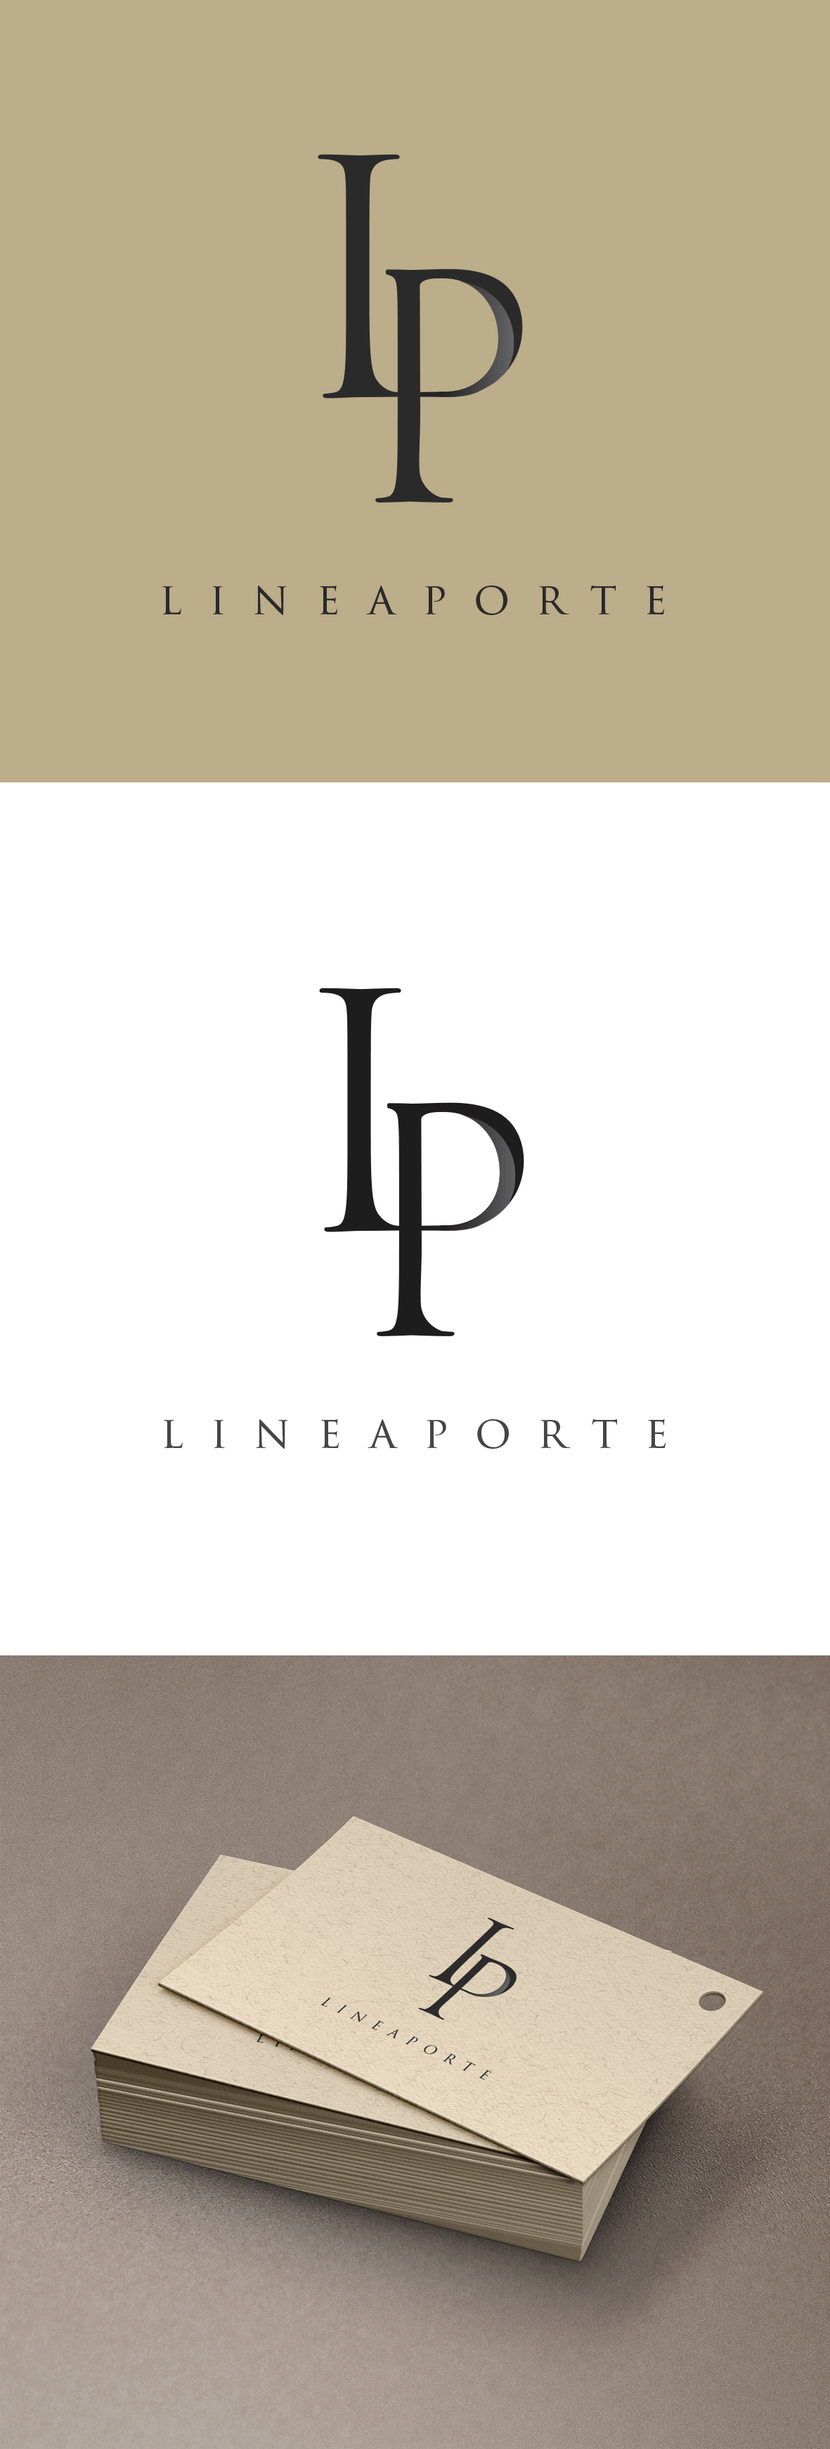 Lineaporte. Логотип-монограмма. - Создание логотипа для фабрики дверей «LINEAPORTE».